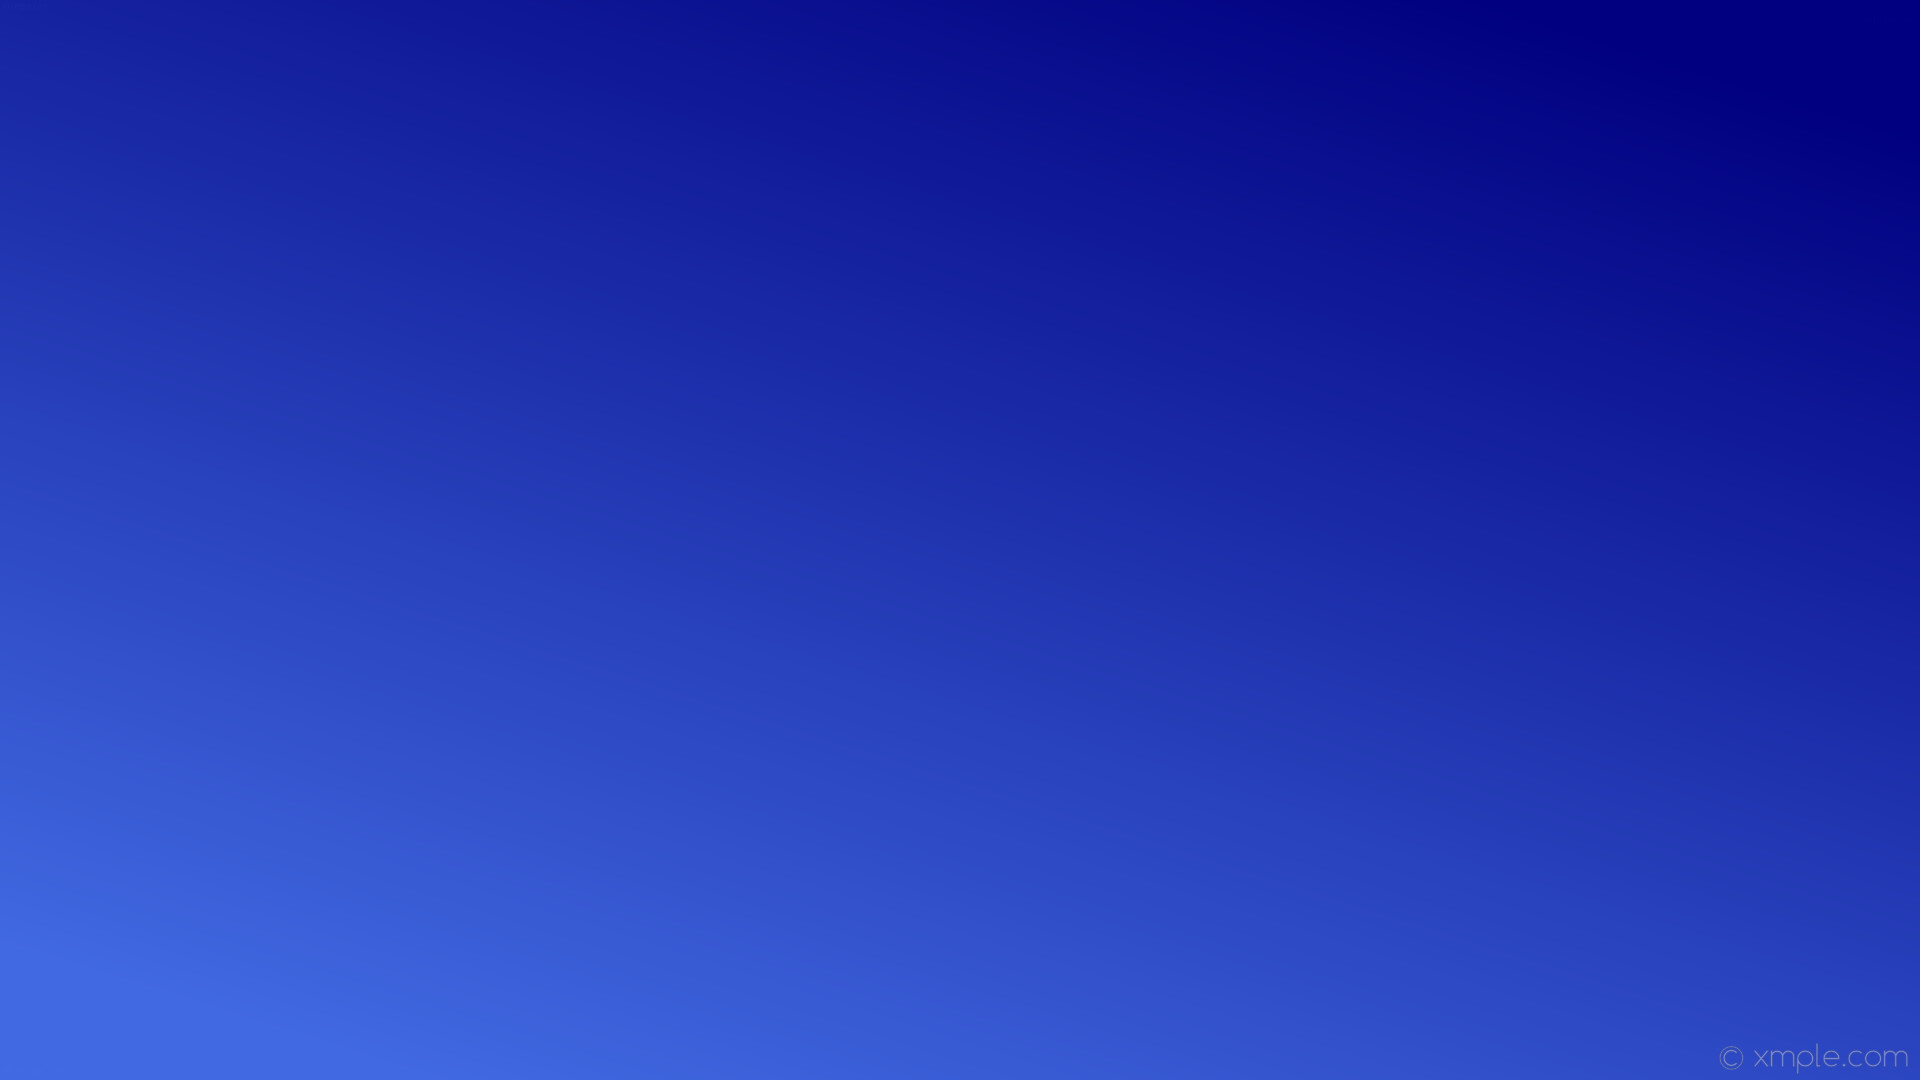 1920x1080 wallpaper blue gradient linear royal blue navy #4169e1 #000080 225Â°